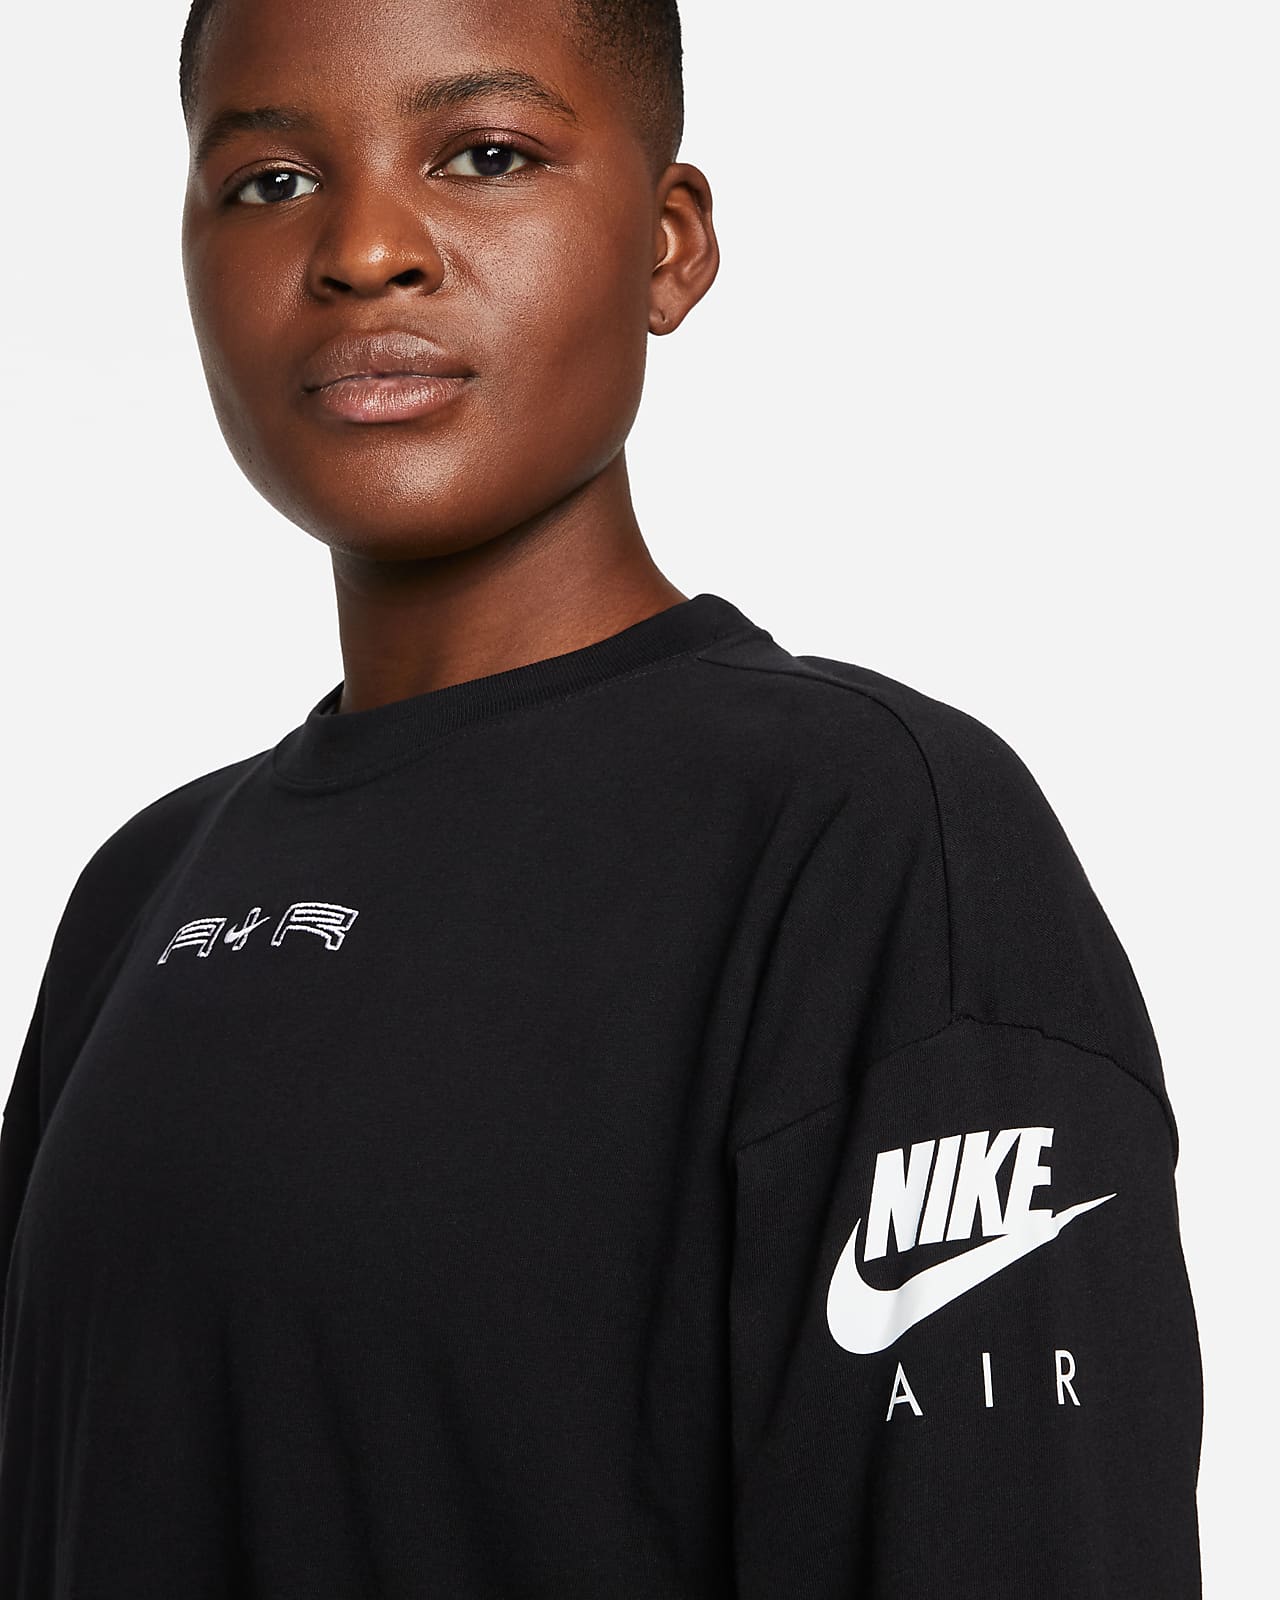 Nike Air Women's Long-Sleeve Top. Nike SA